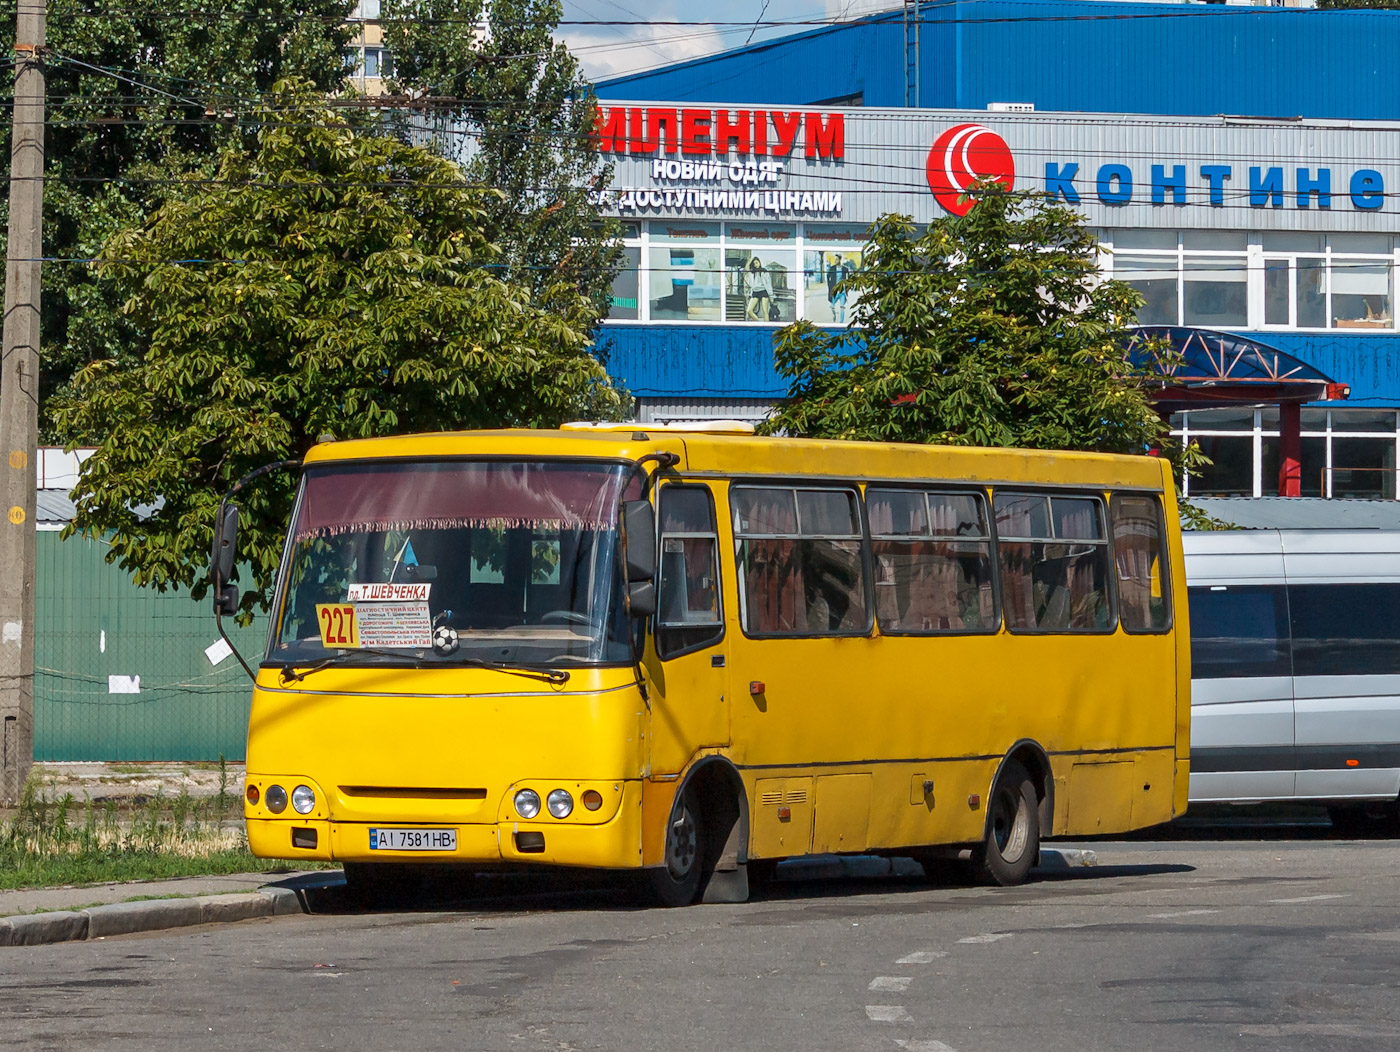 Kyiv, Bogdan А09201 č. АІ 7581 НВ